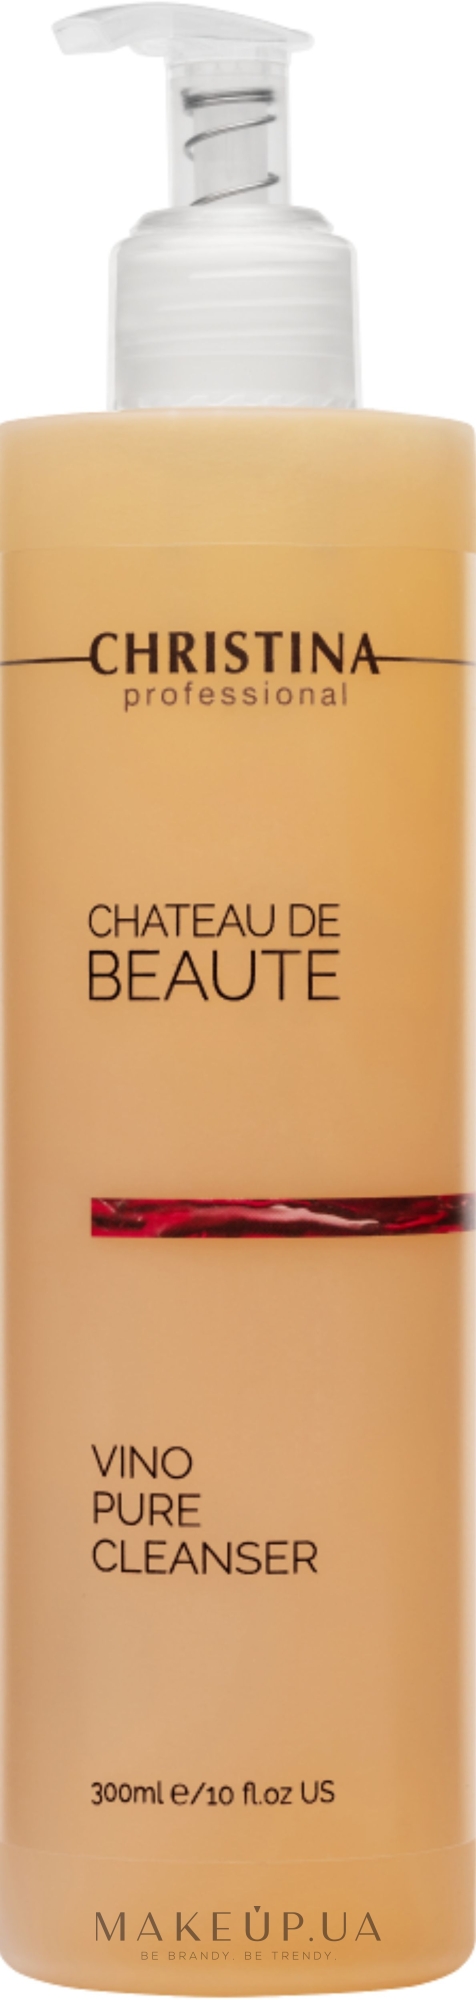 Очищуючий гель з виноградом - Christina Chateau de Beaute Vino Pure Cleanser — фото 300ml